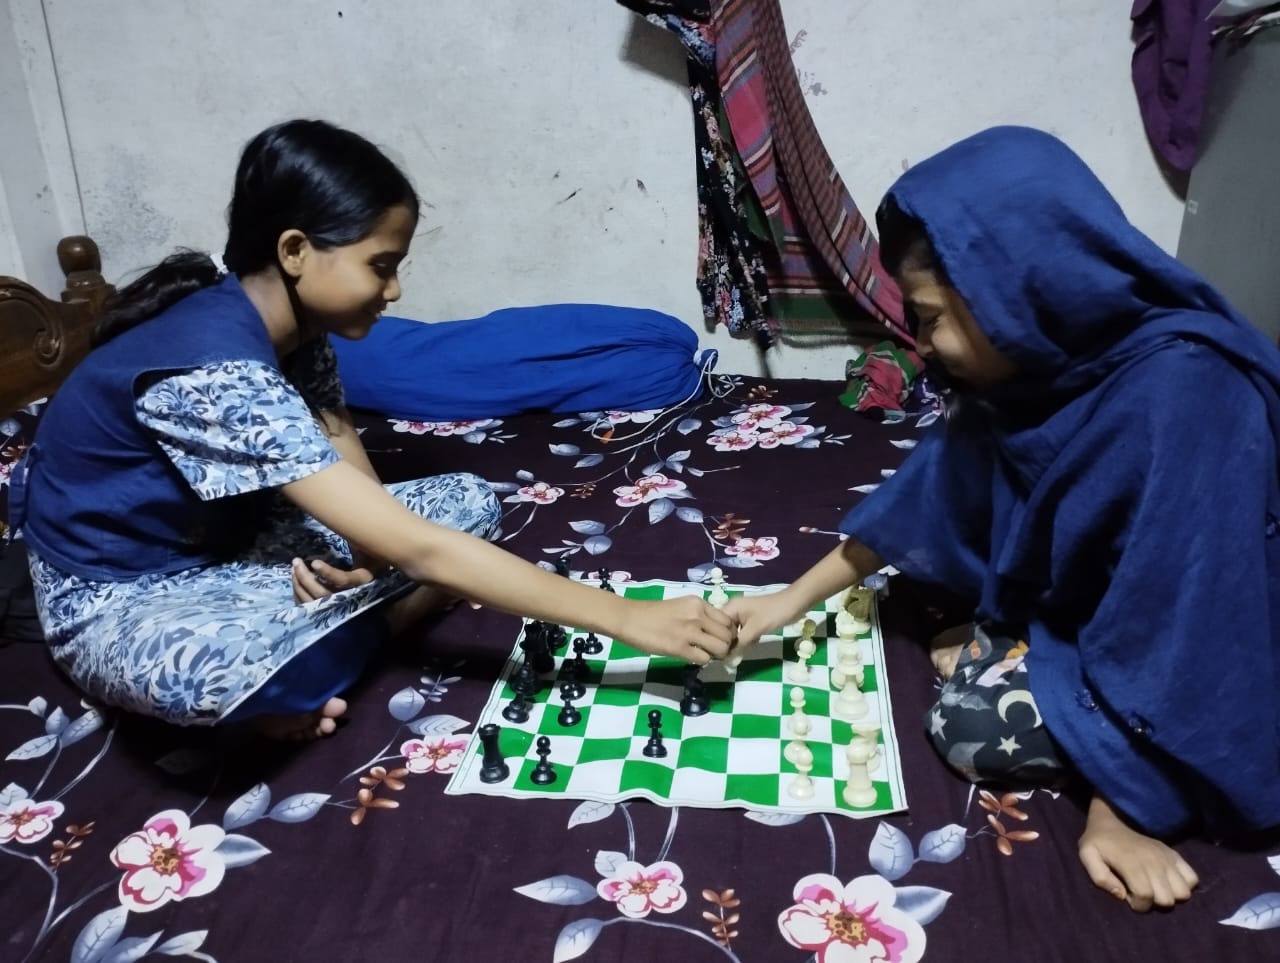 Lamia and Taiyeba playing chess